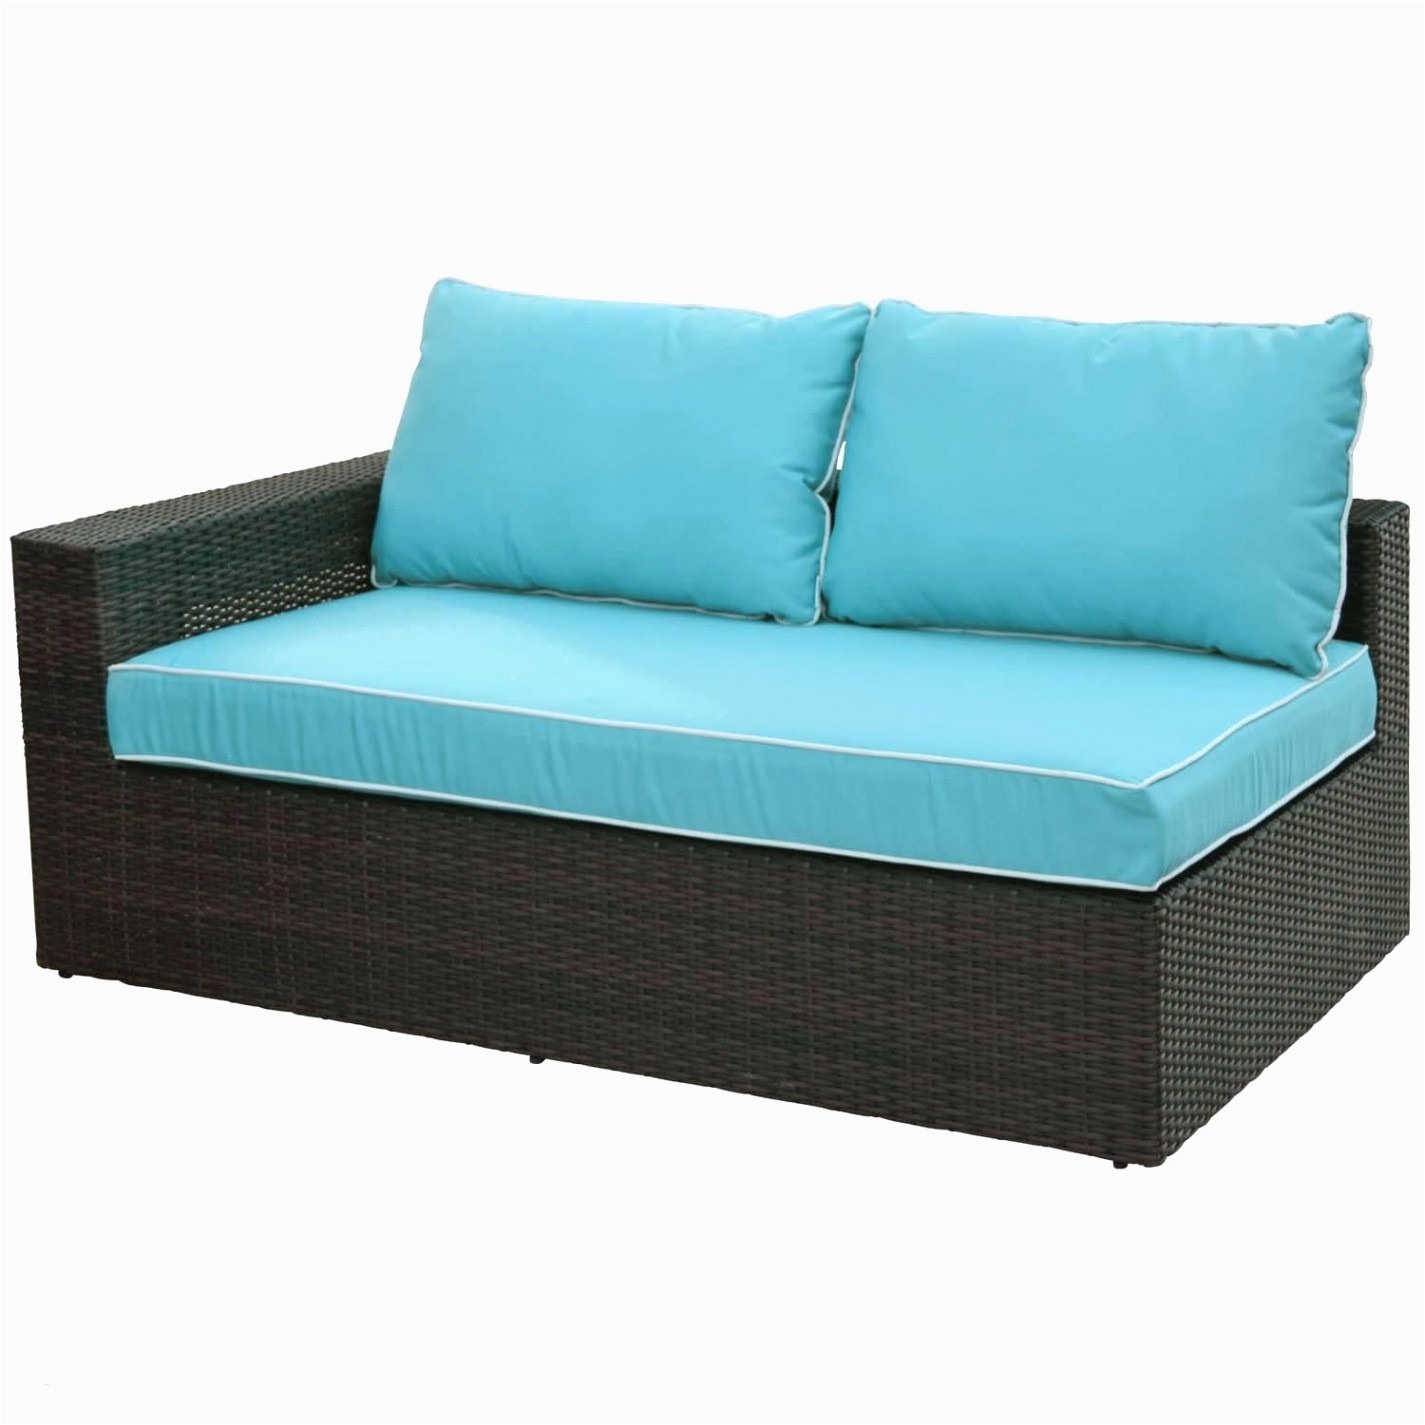 patio furniture couch set luxury outdoor furniture repair elegant neueste wicker outdoor sofa 0d